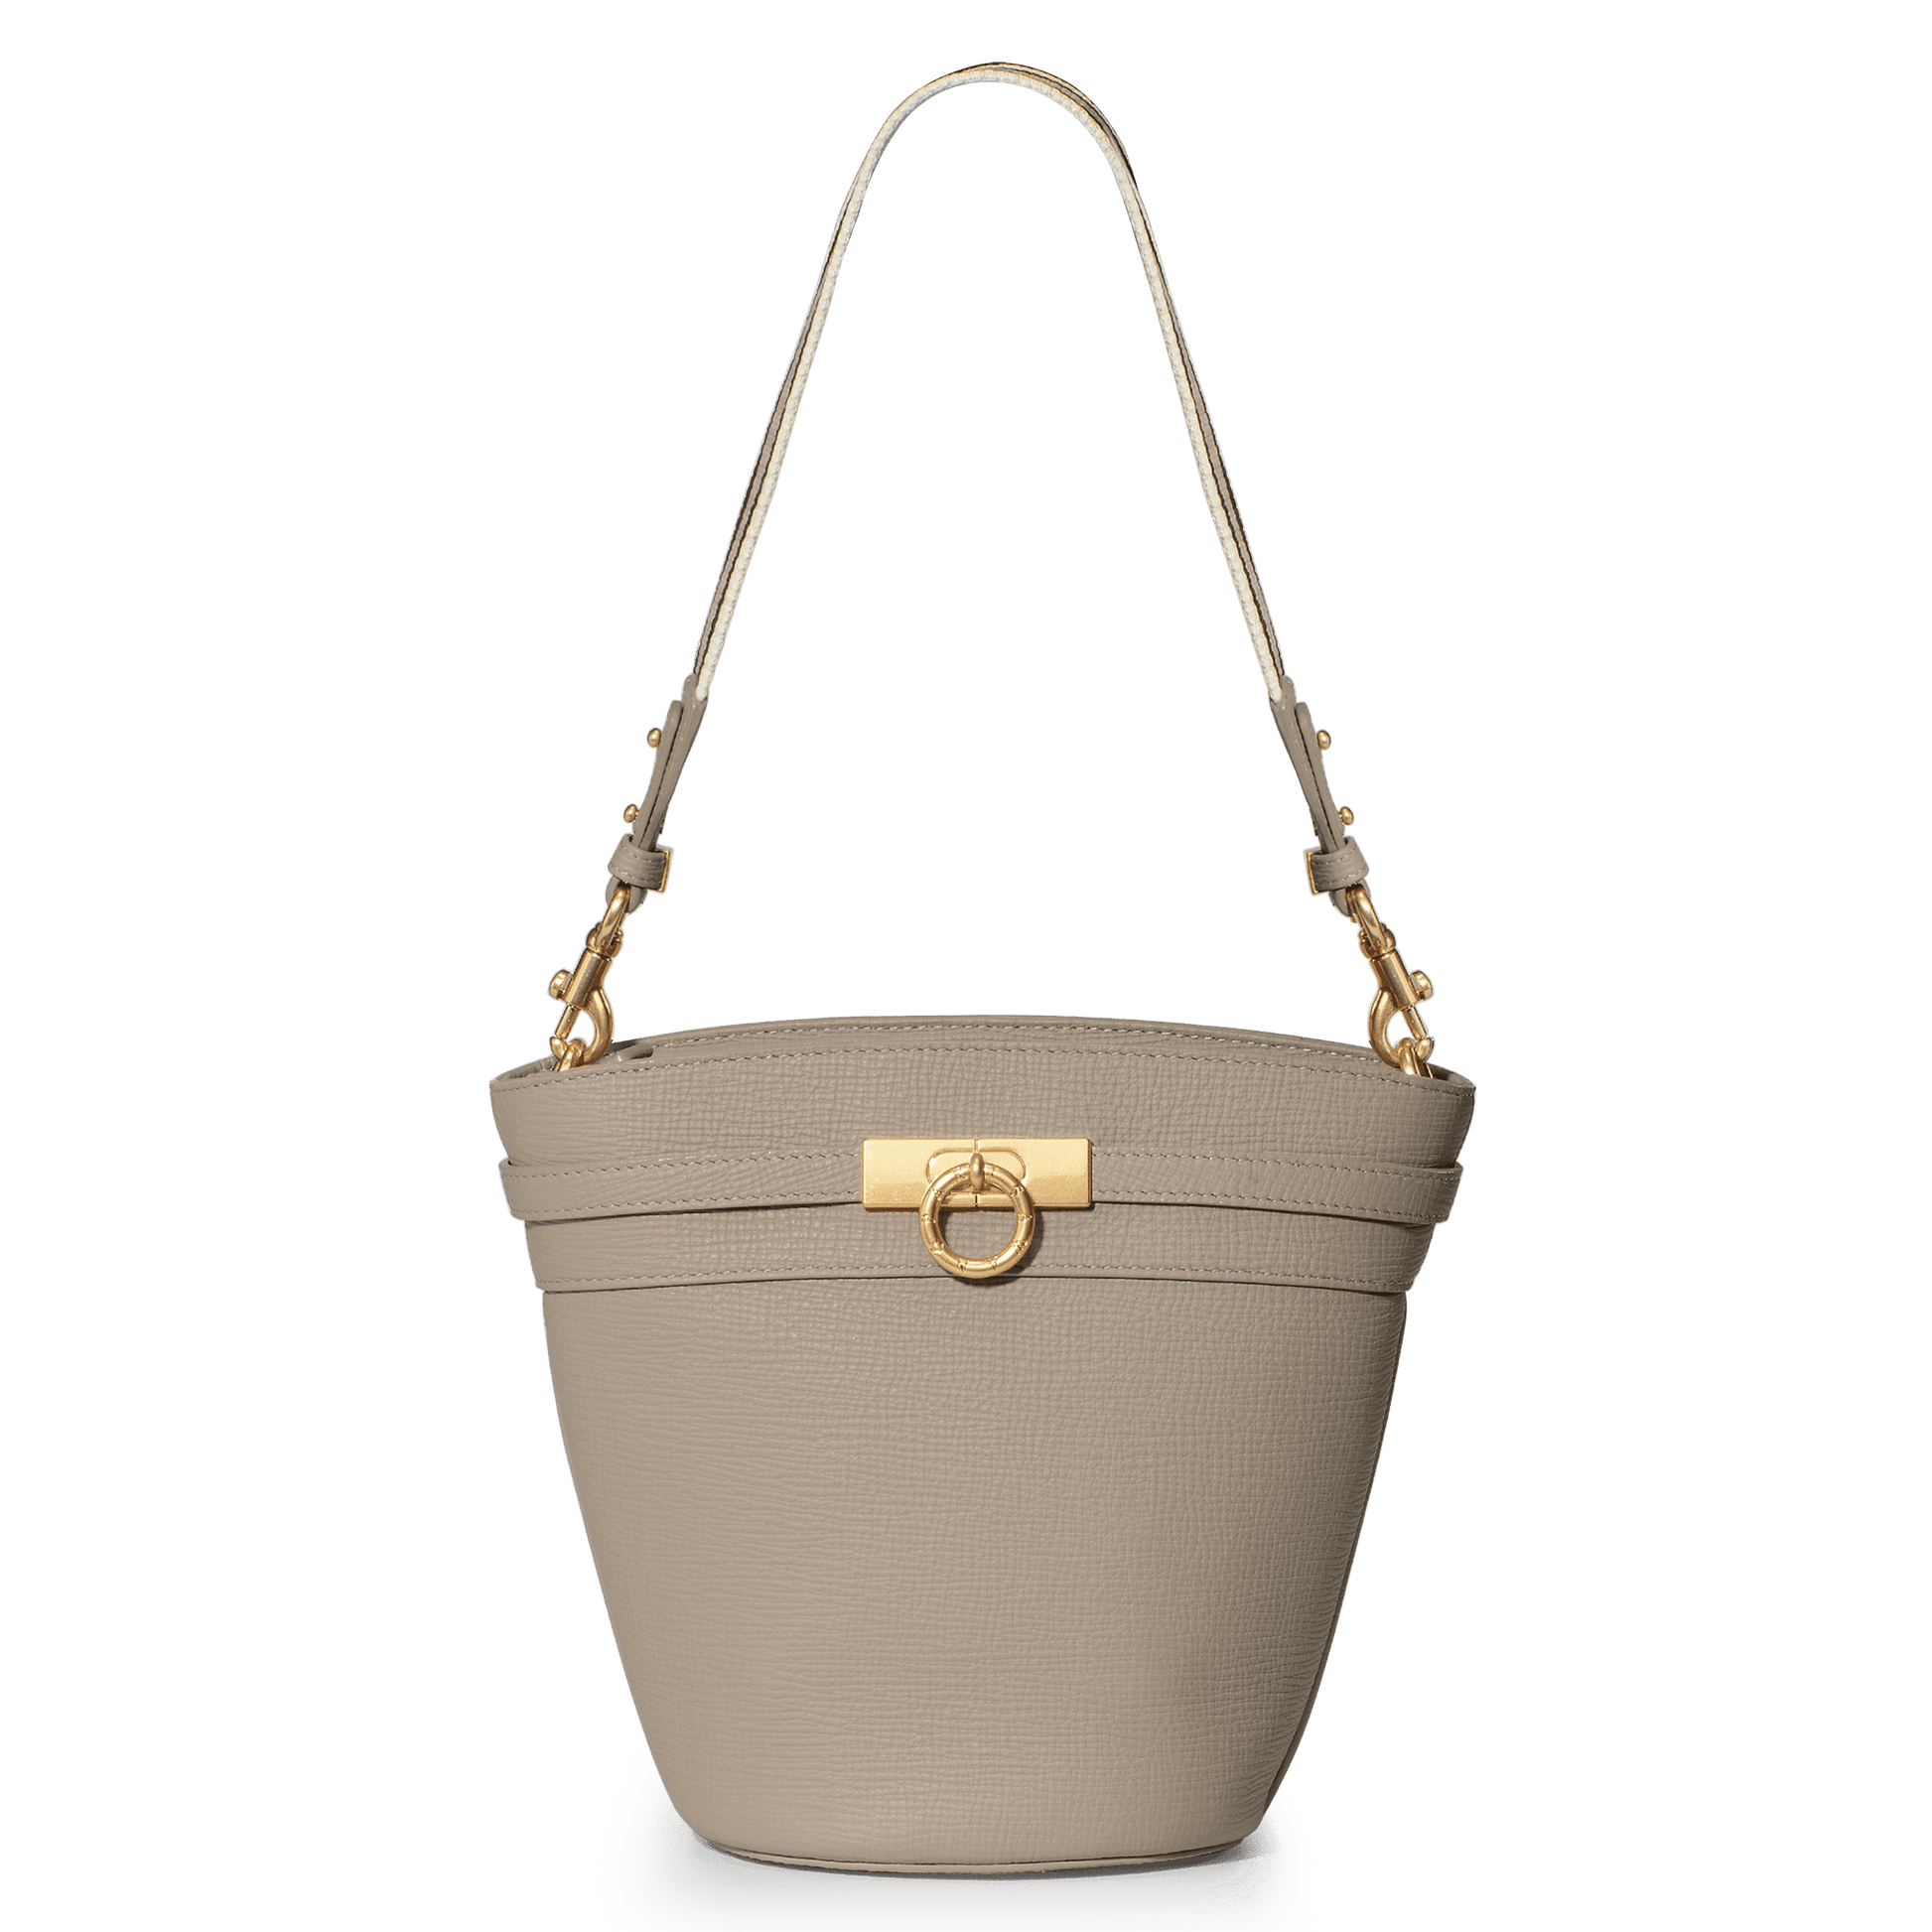 CurlShoppe The Everything Bag – Take Khair Beauty